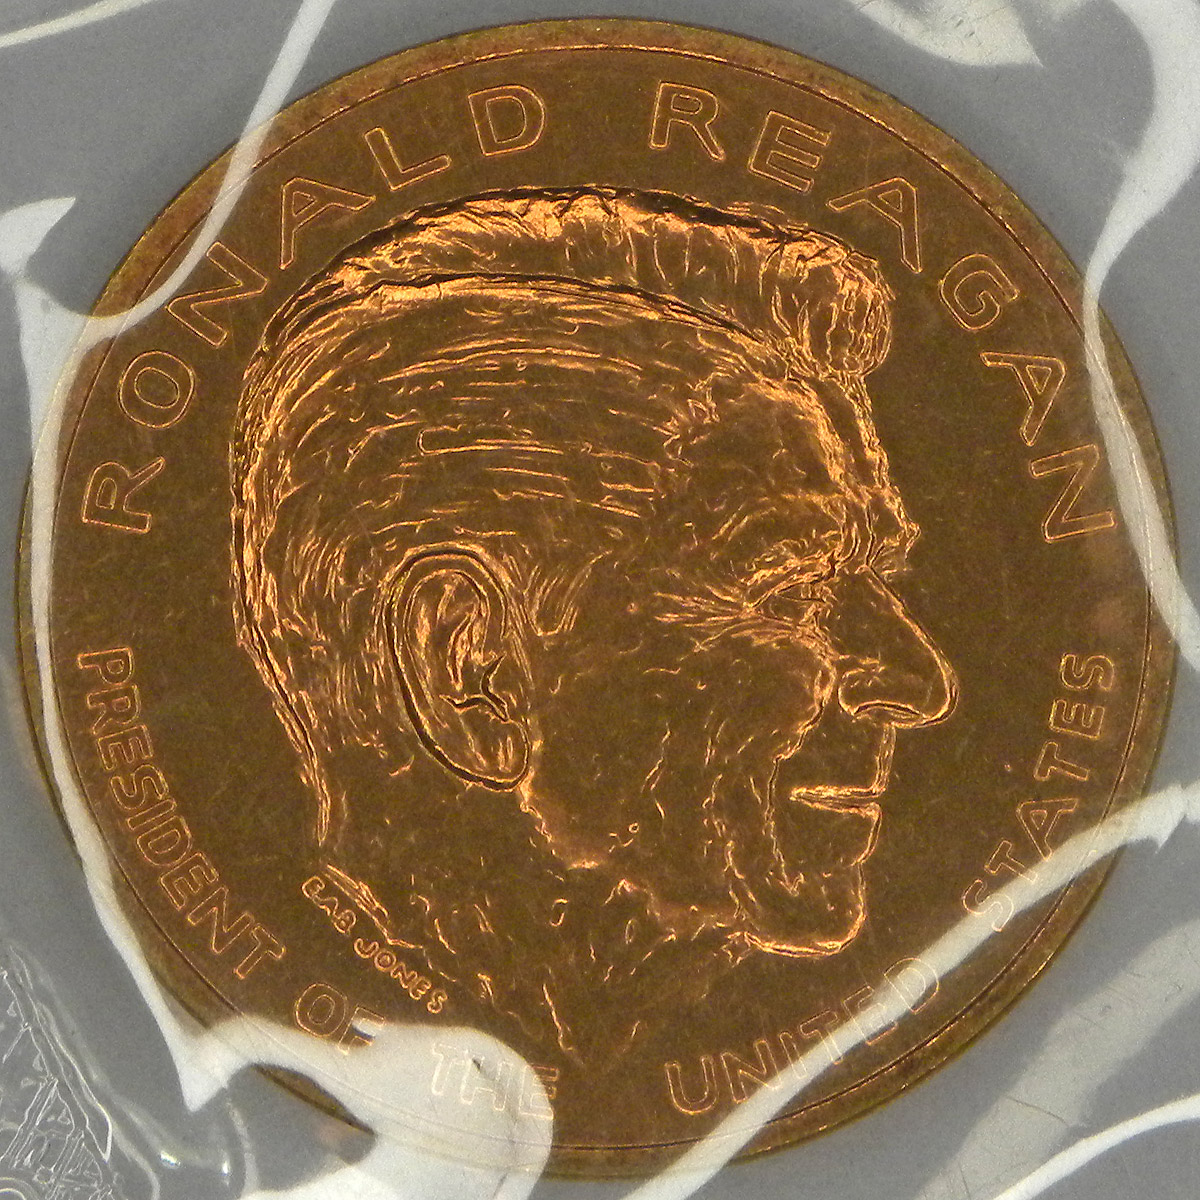 1981 Ronald Reagan medal (obverse)